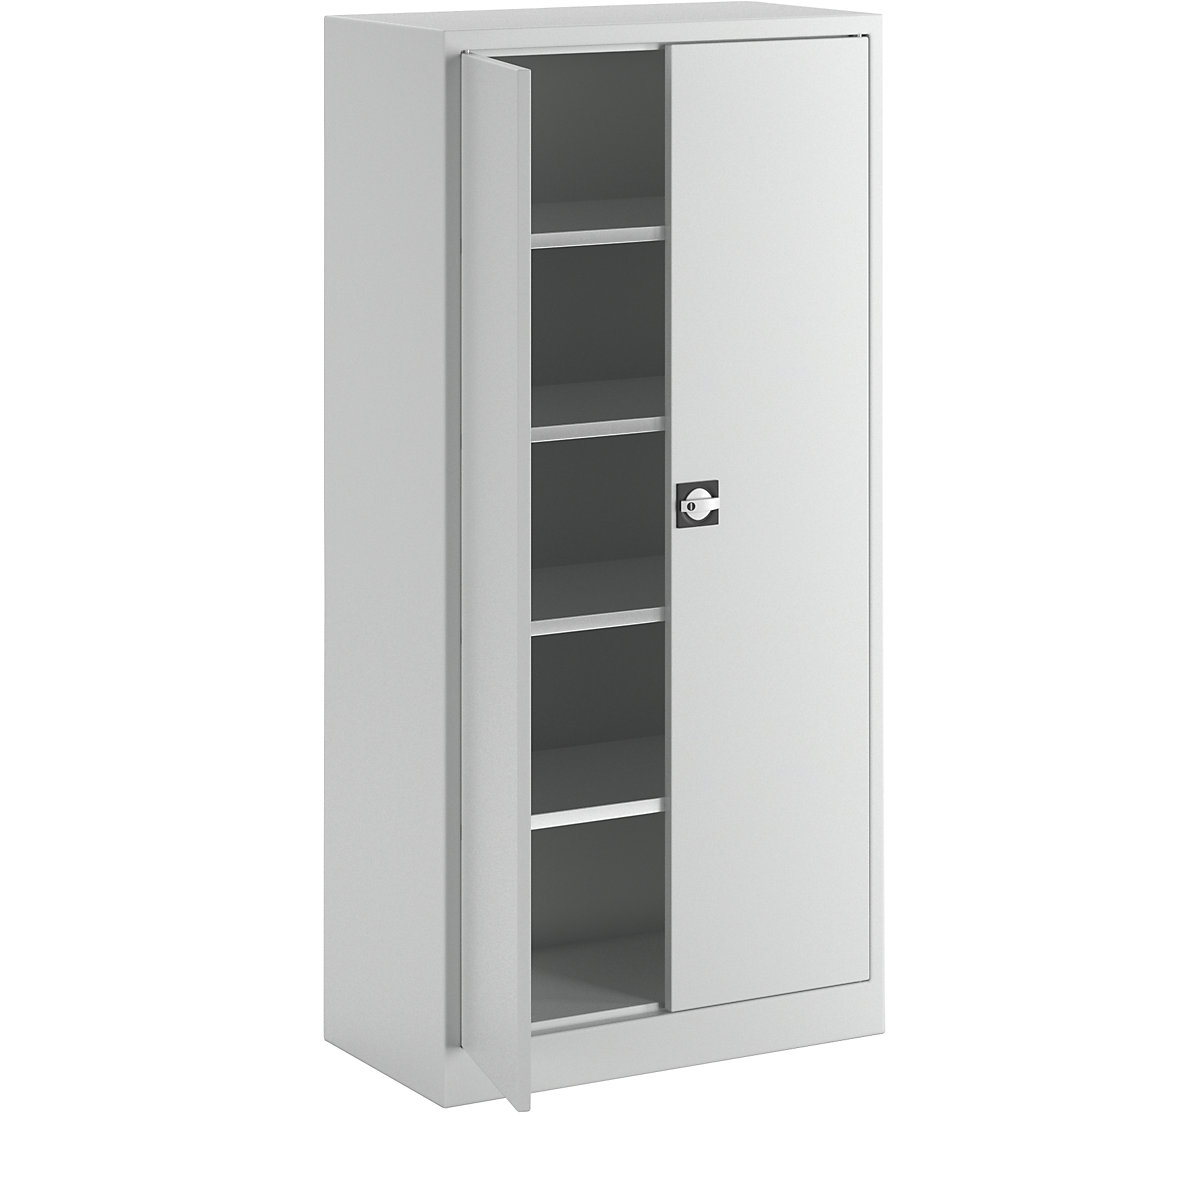 Double door cupboard made of sheet steel - eurokraft pro